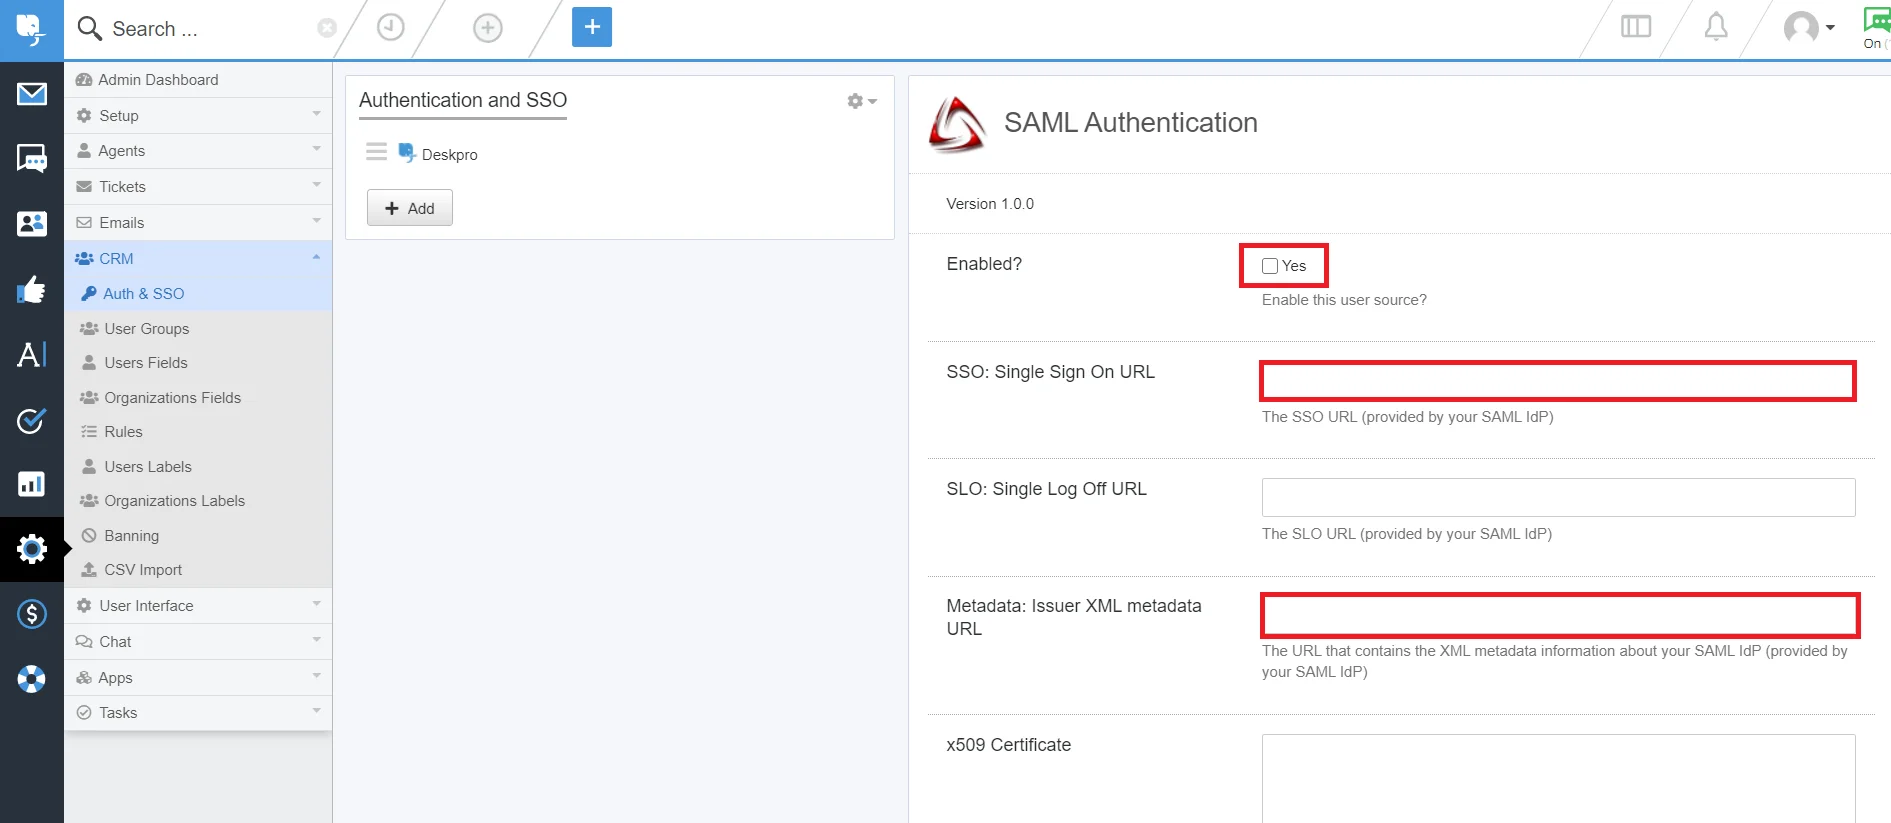 Deskpro SAML SSO integration with Joomla as Identity Provider